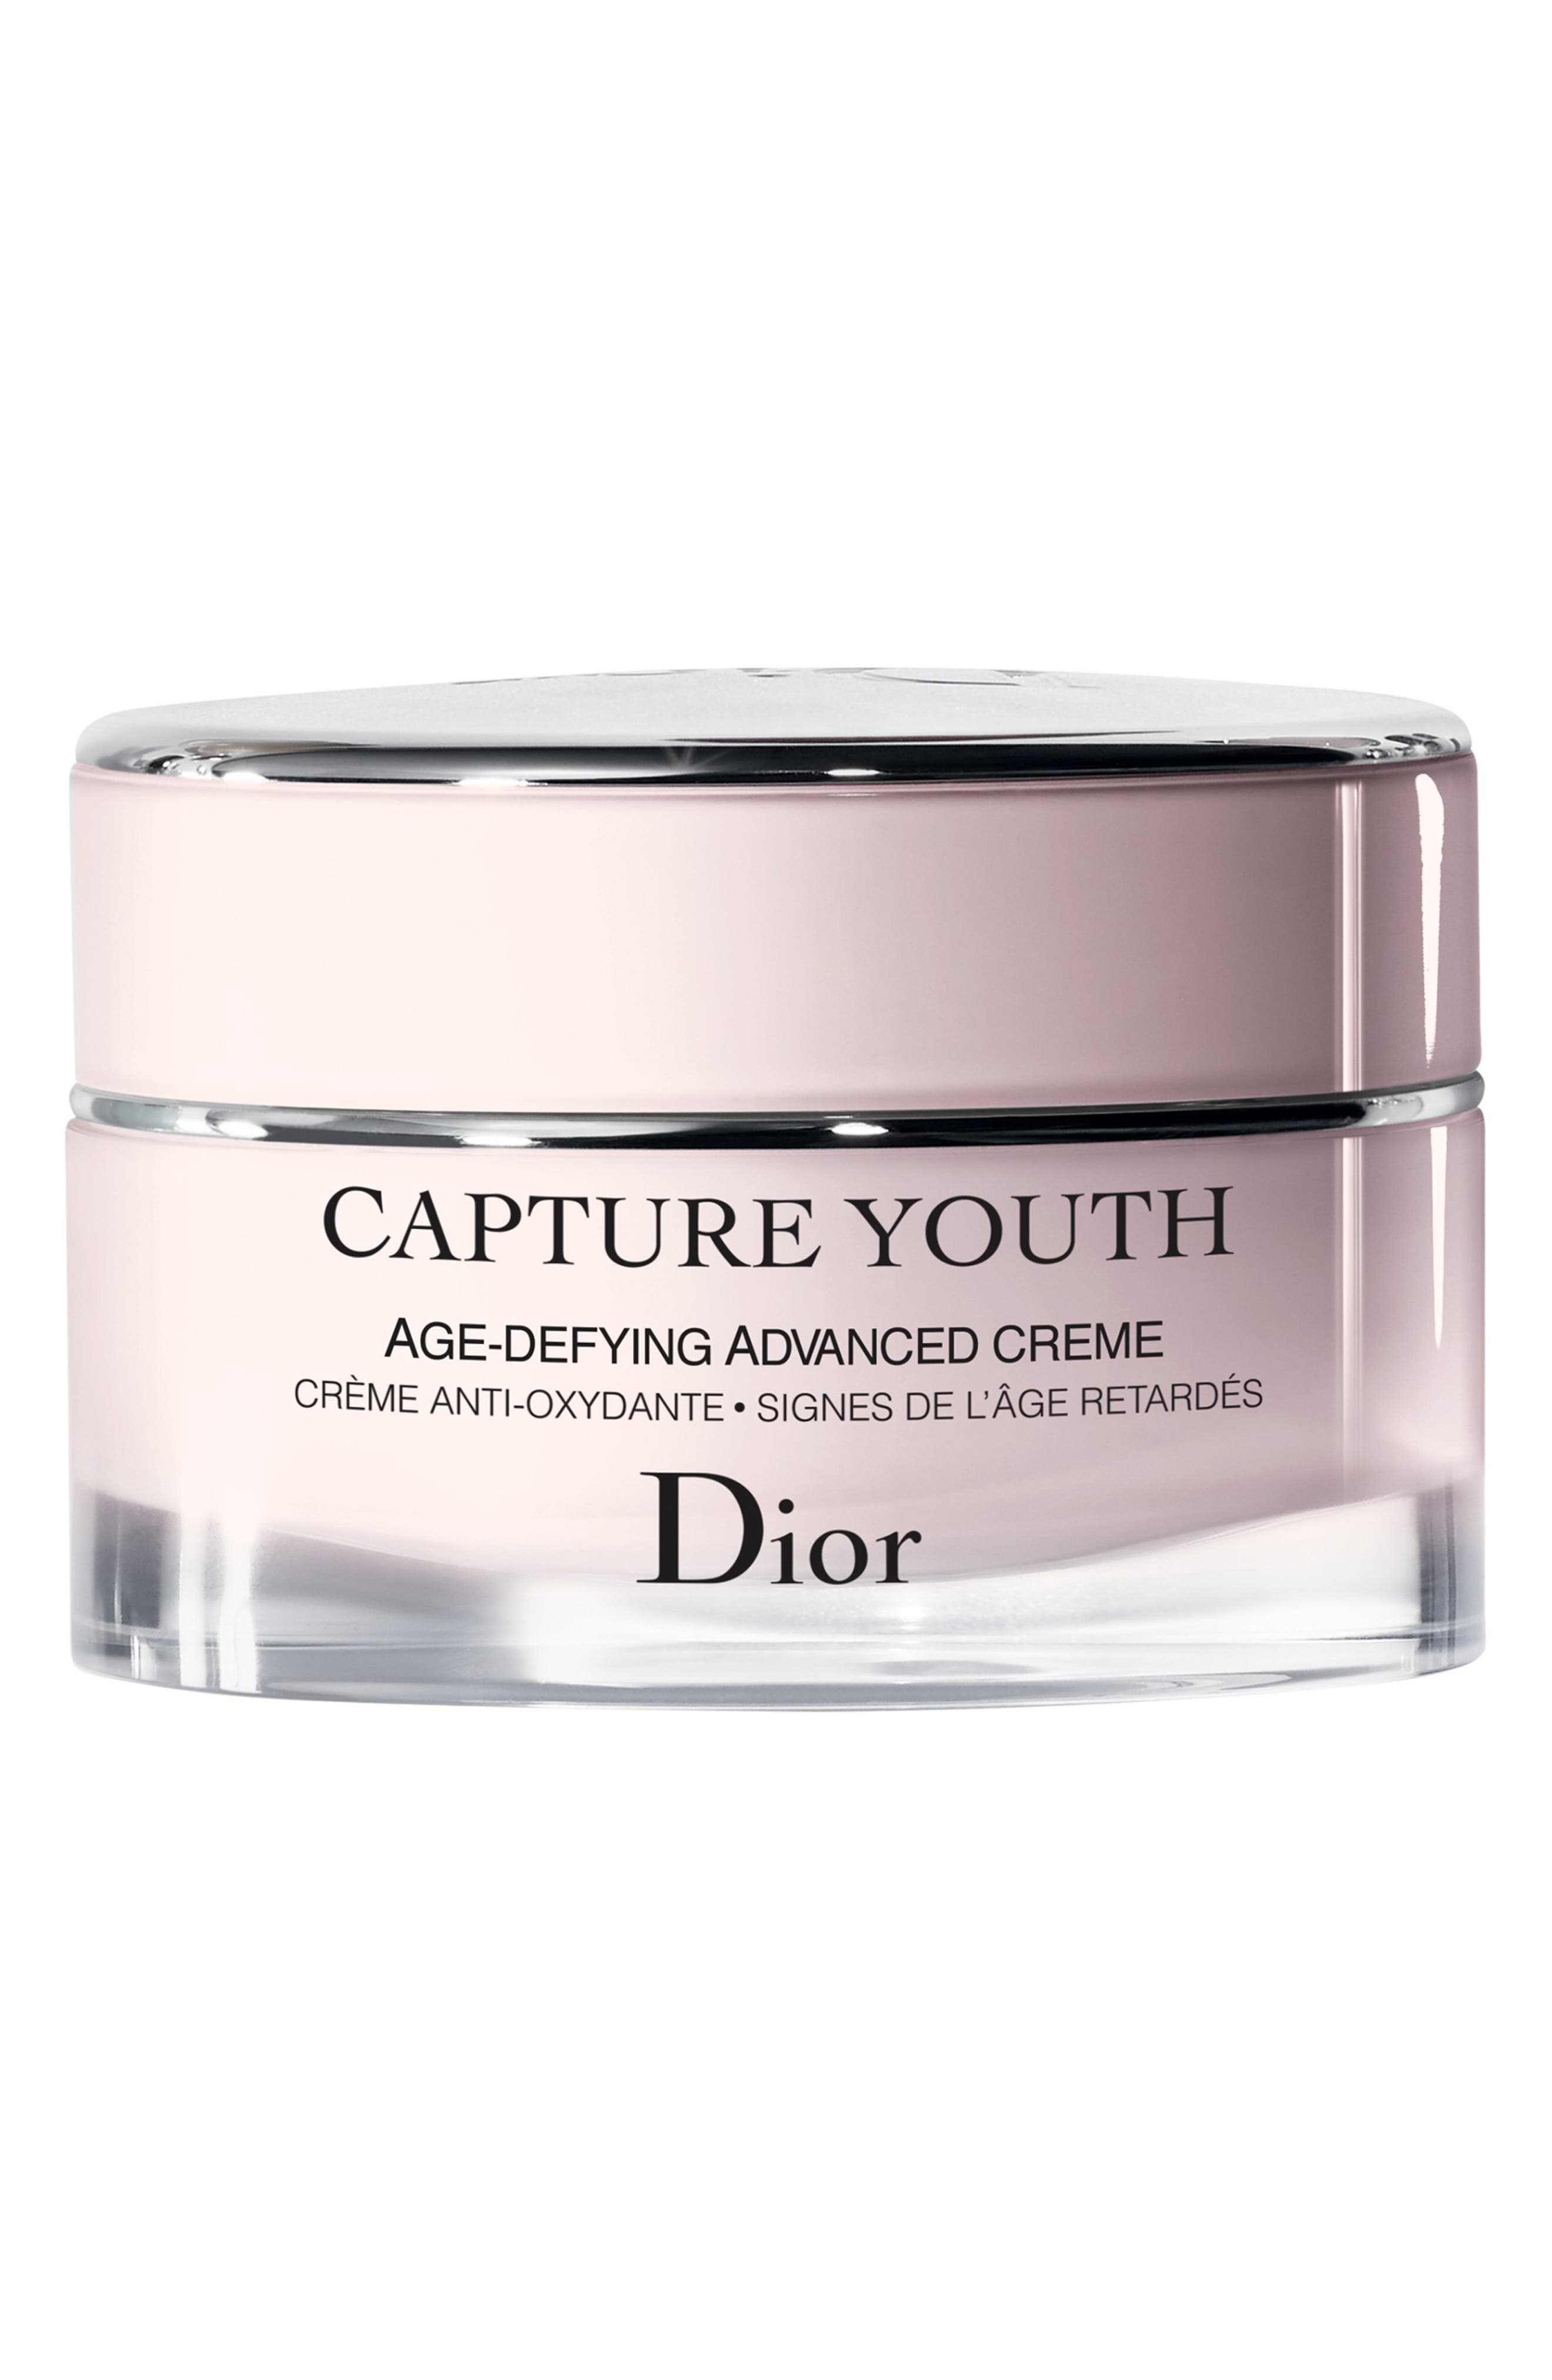 dior capture youth cream ingredients